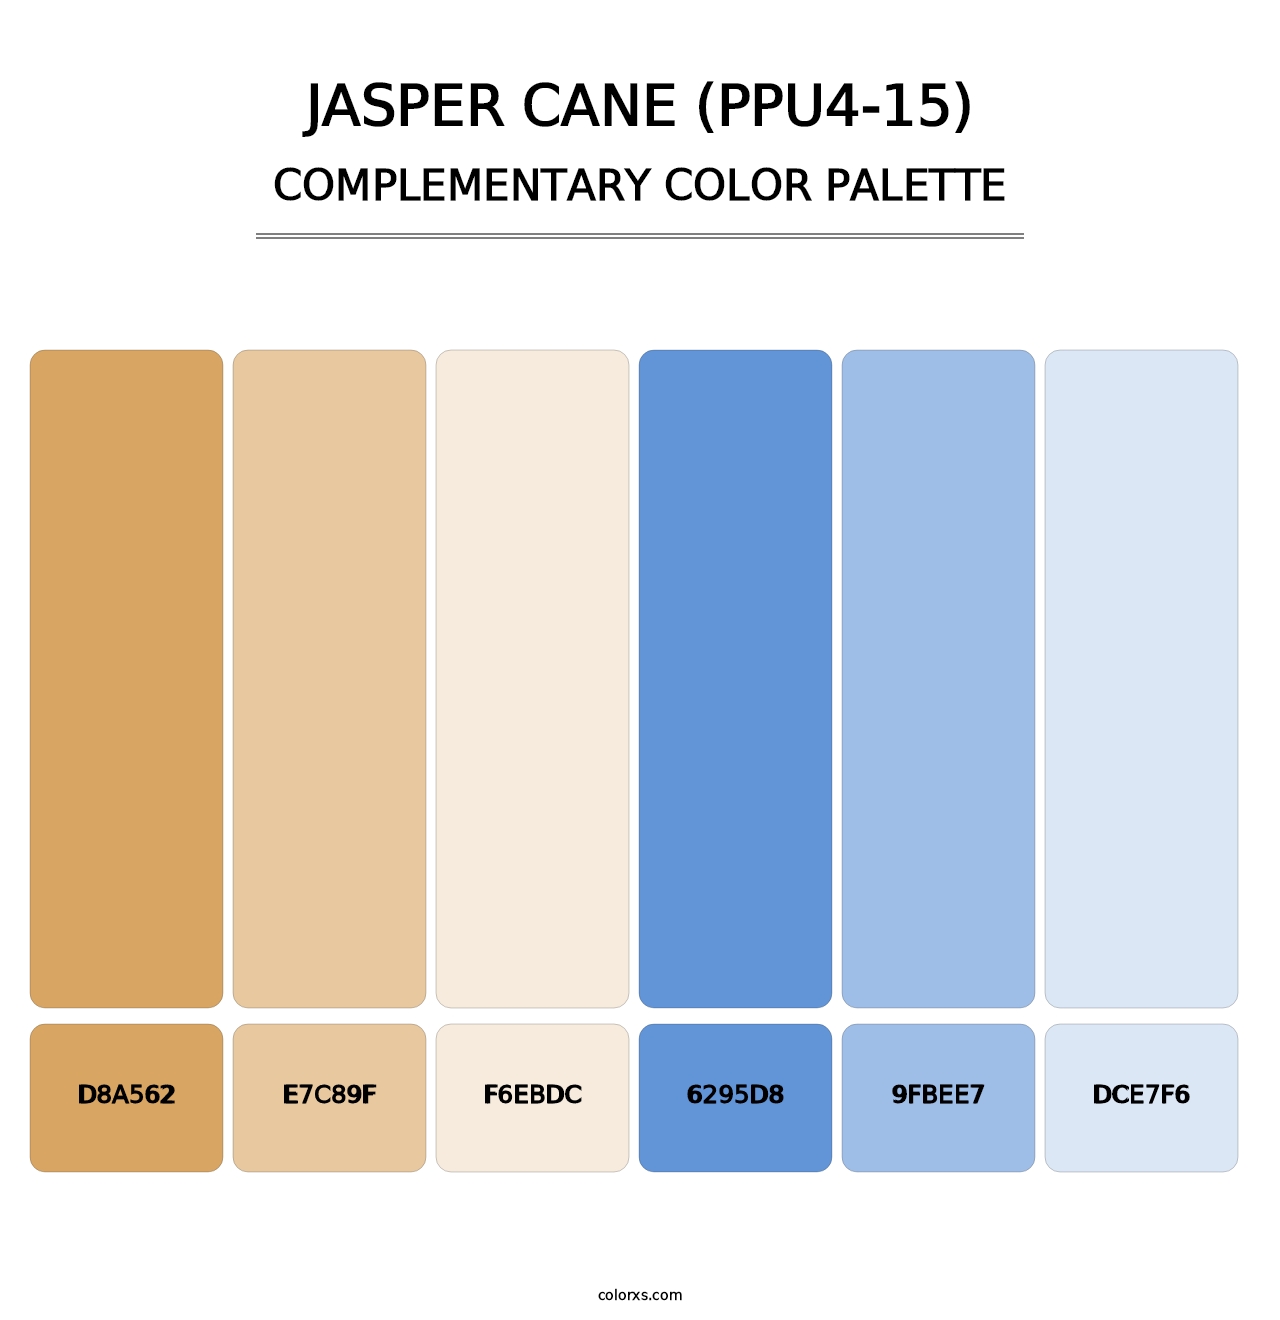 Jasper Cane (PPU4-15) - Complementary Color Palette